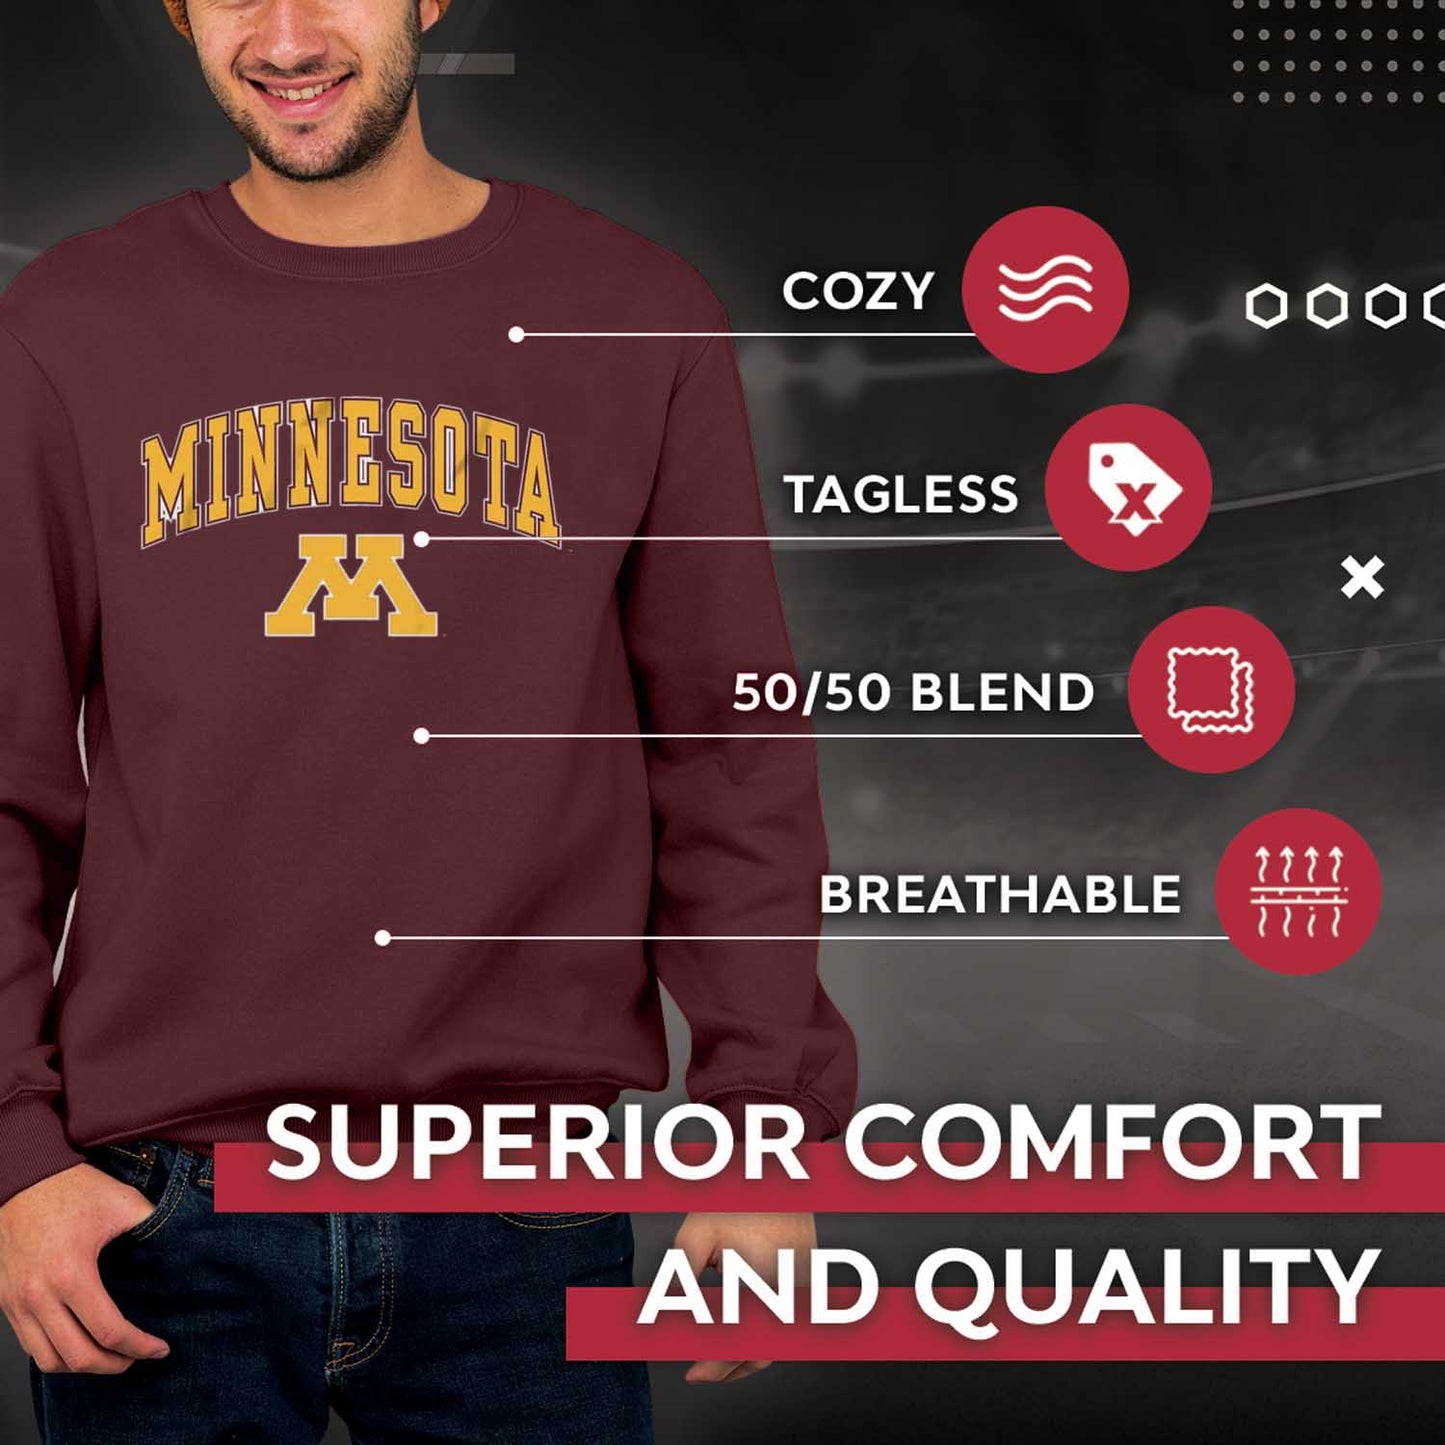 Minnesota Golden Gophers Adult Arch & Logo Soft Style Gameday Crewneck Sweatshirt - Maroon